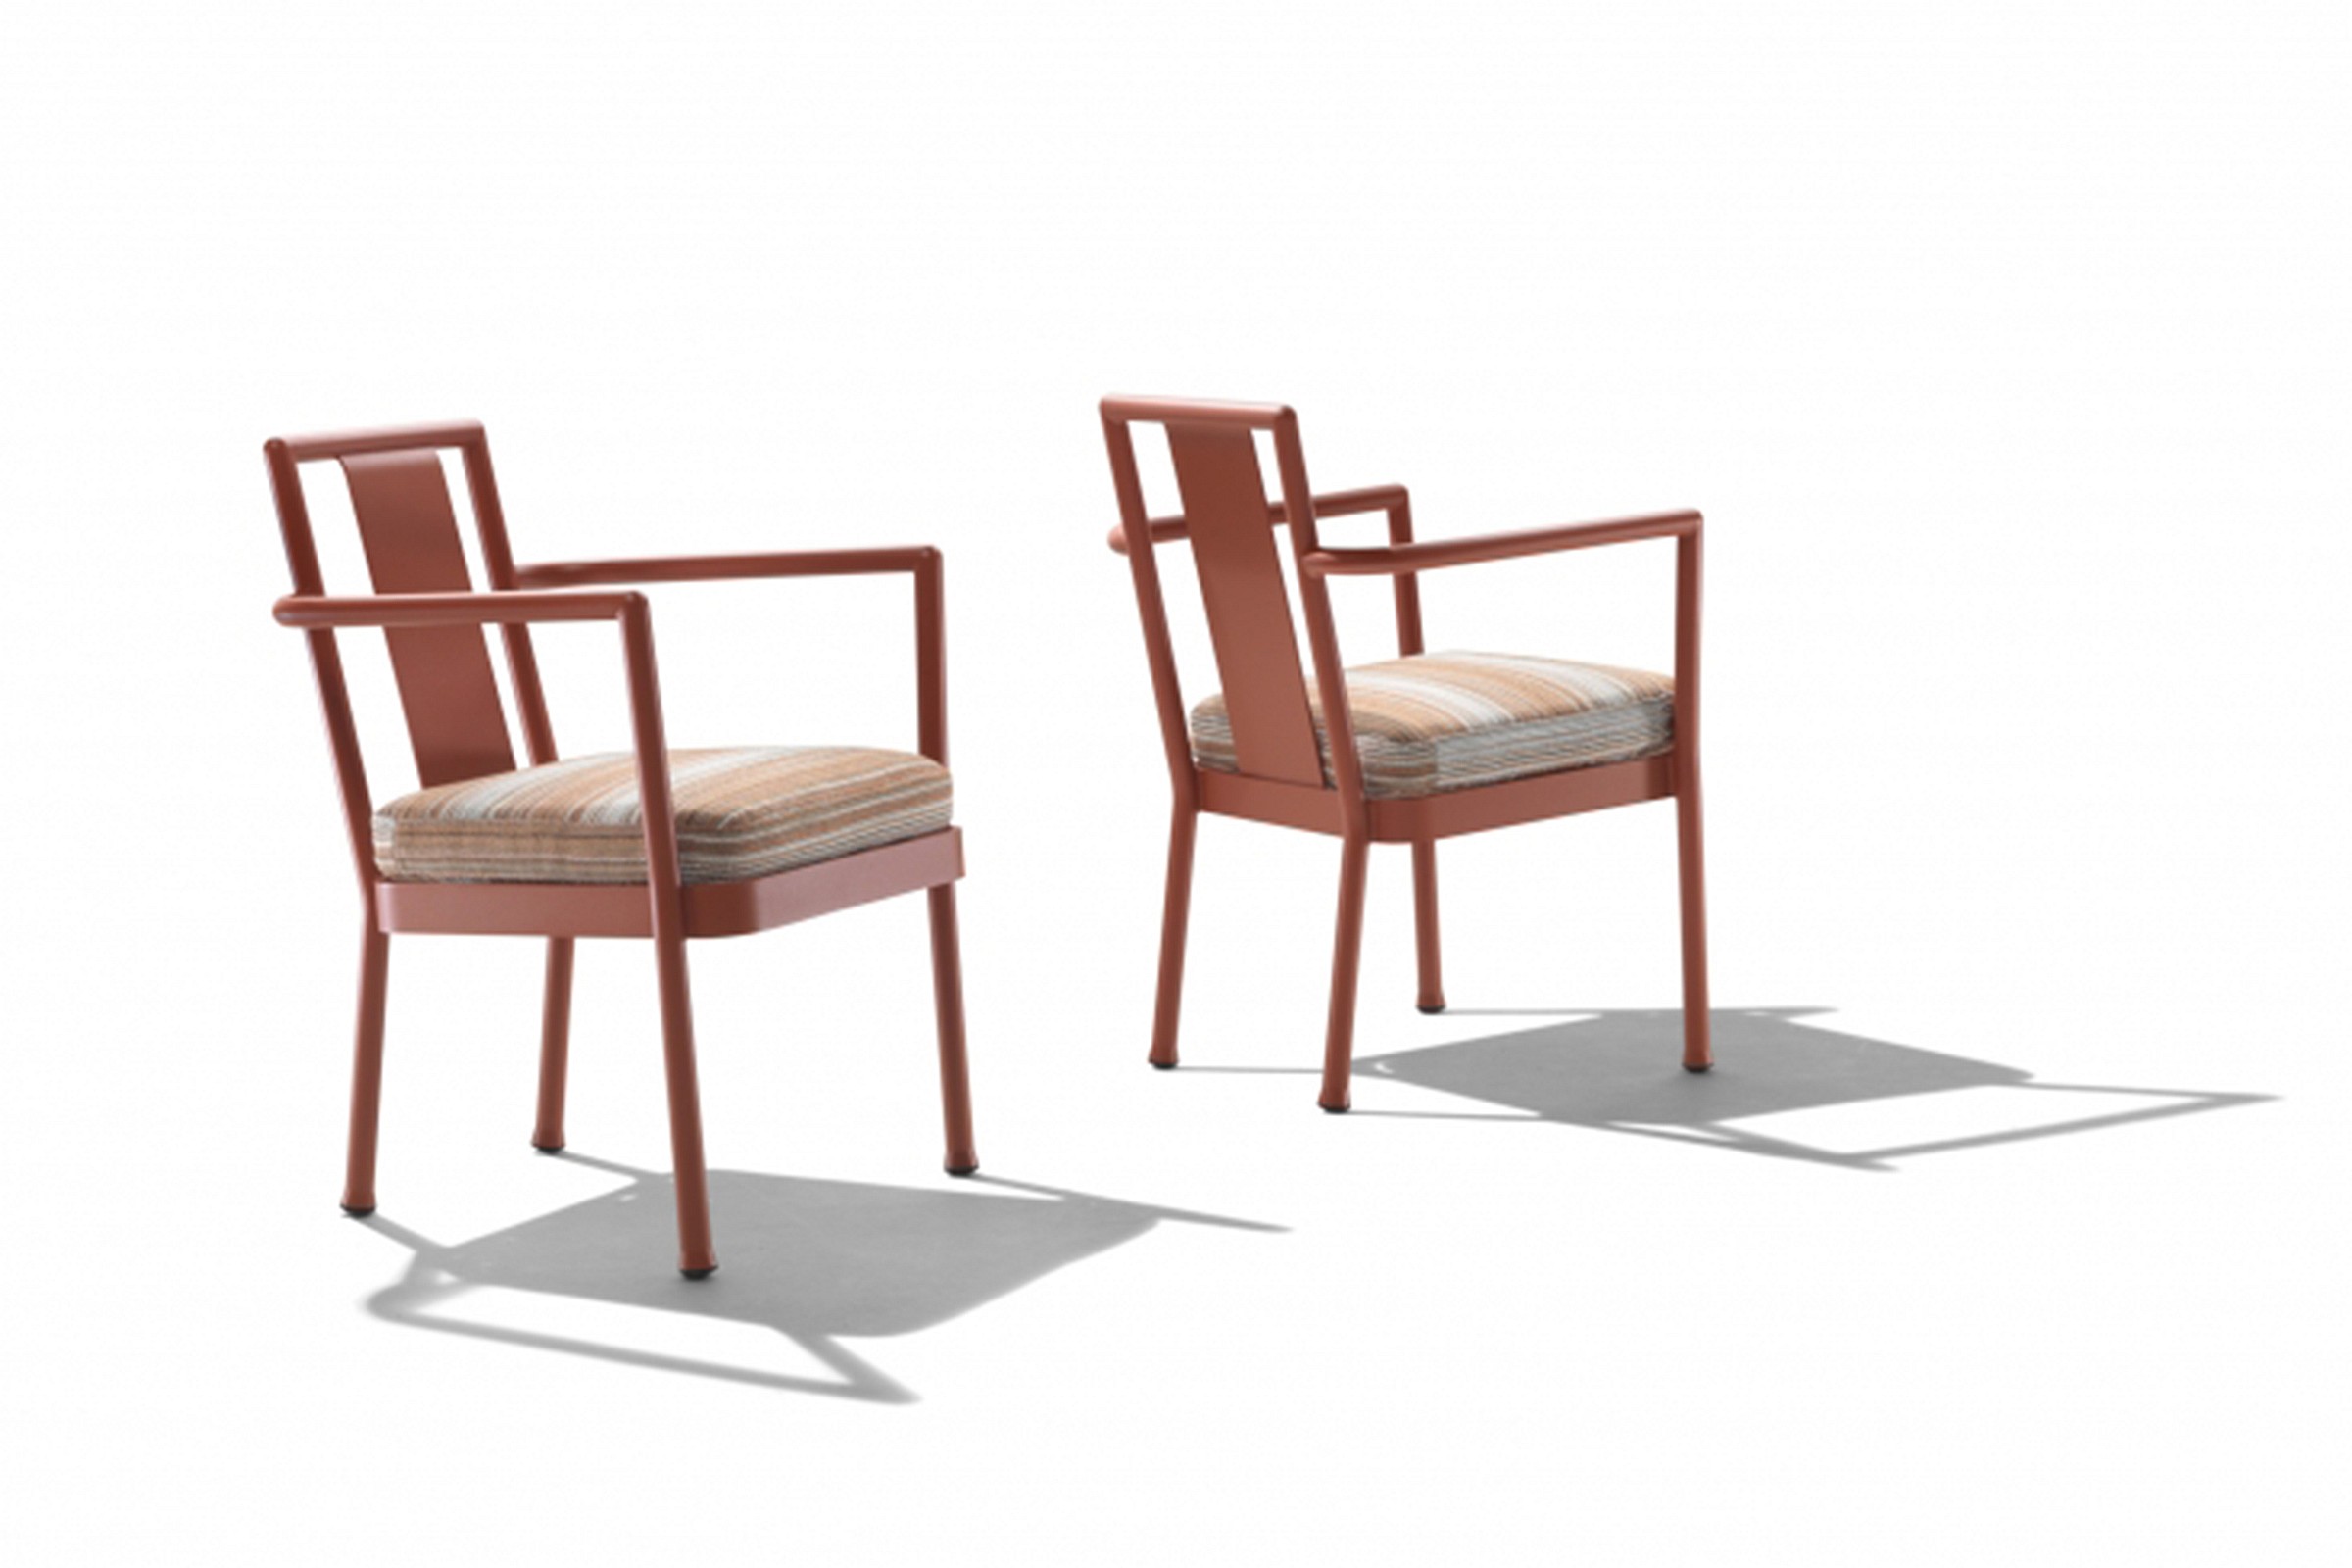 Camargue chair by Flexform